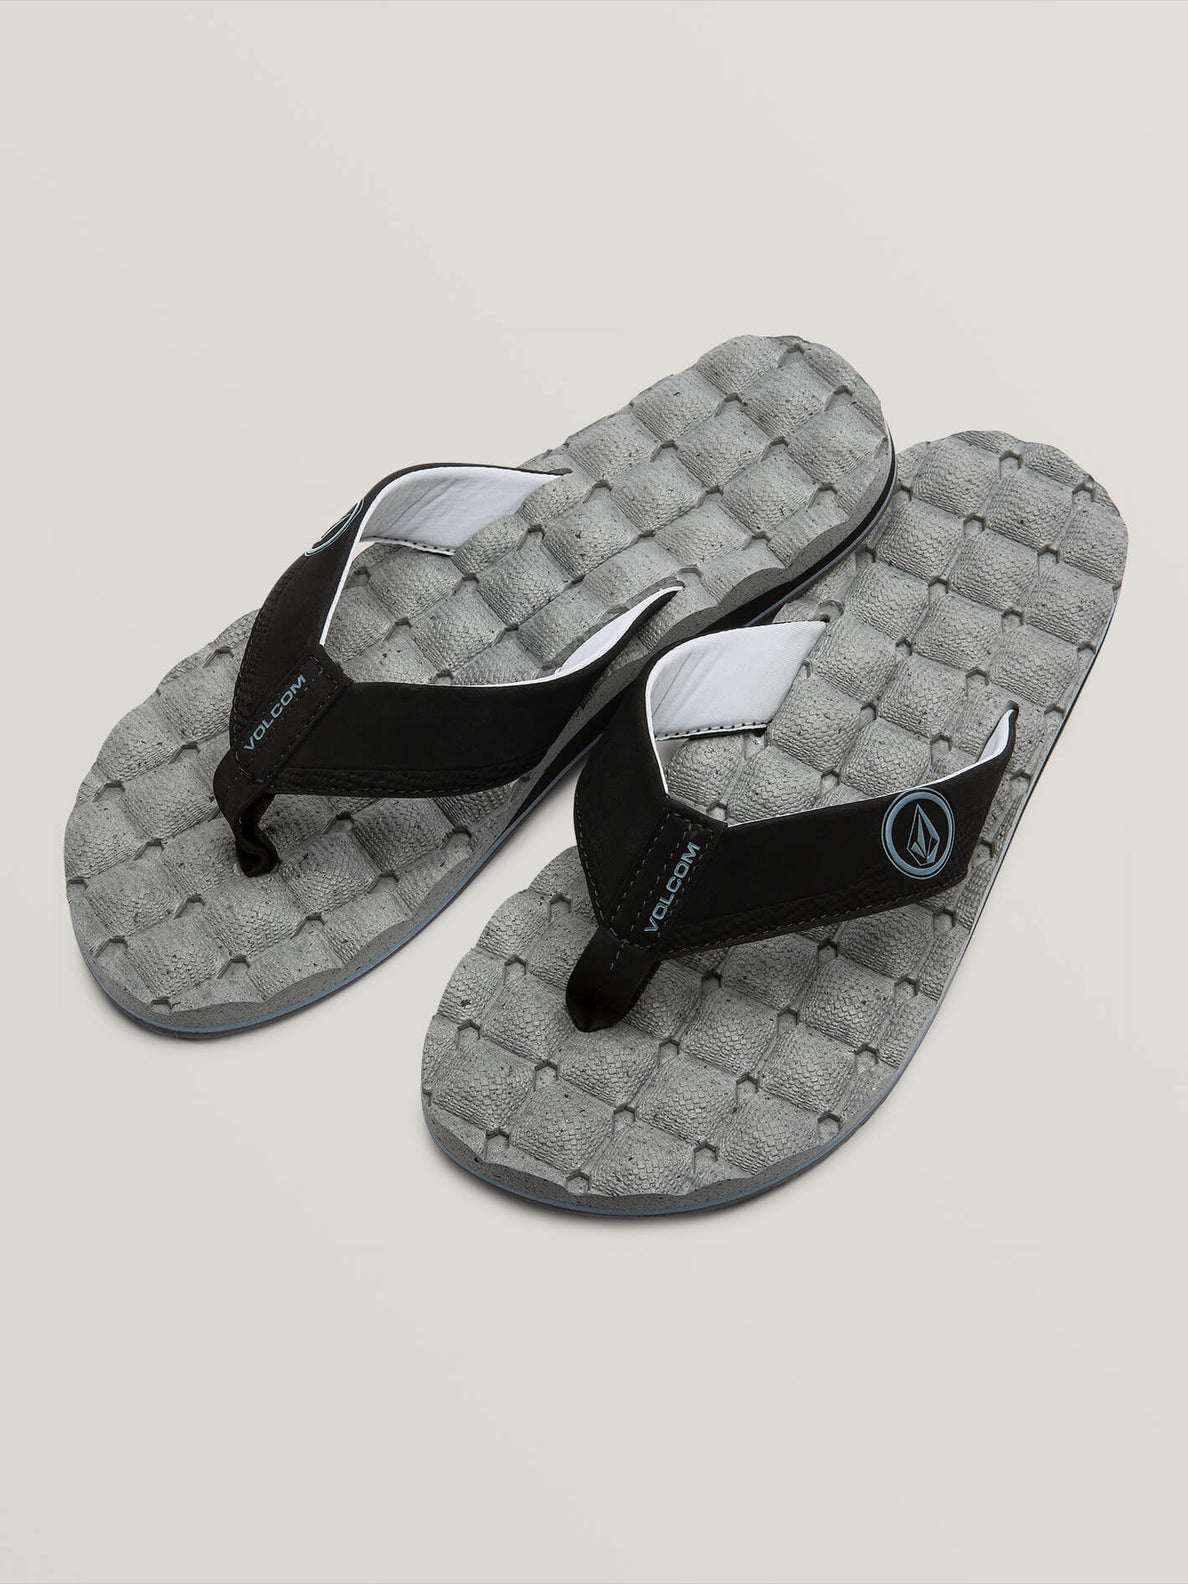 gray sandals